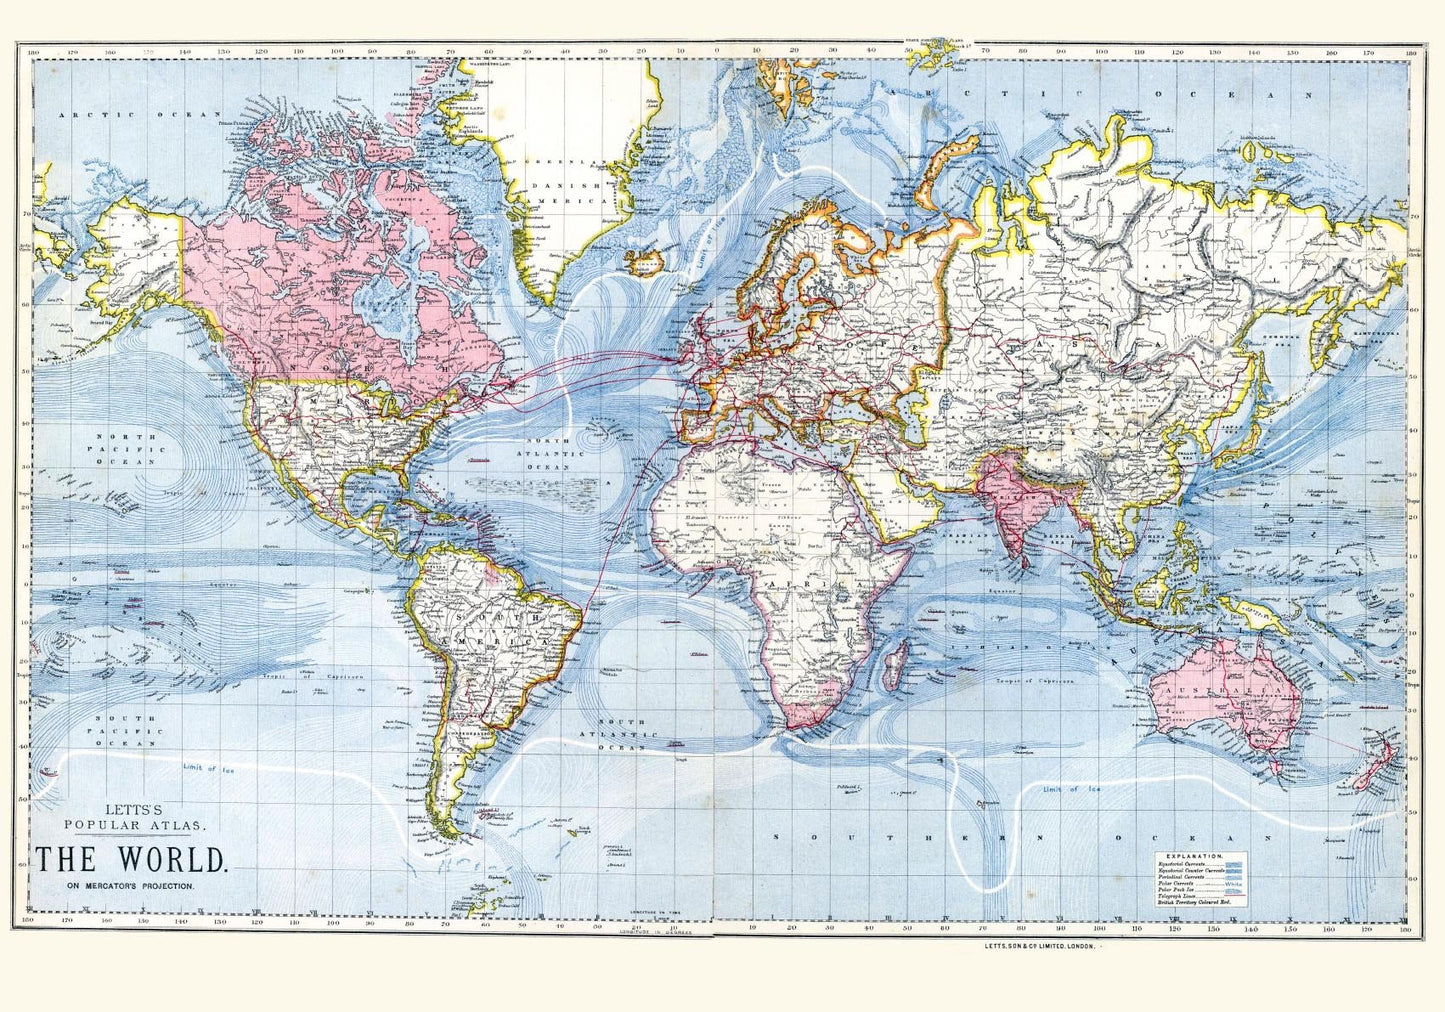 The Big World Map